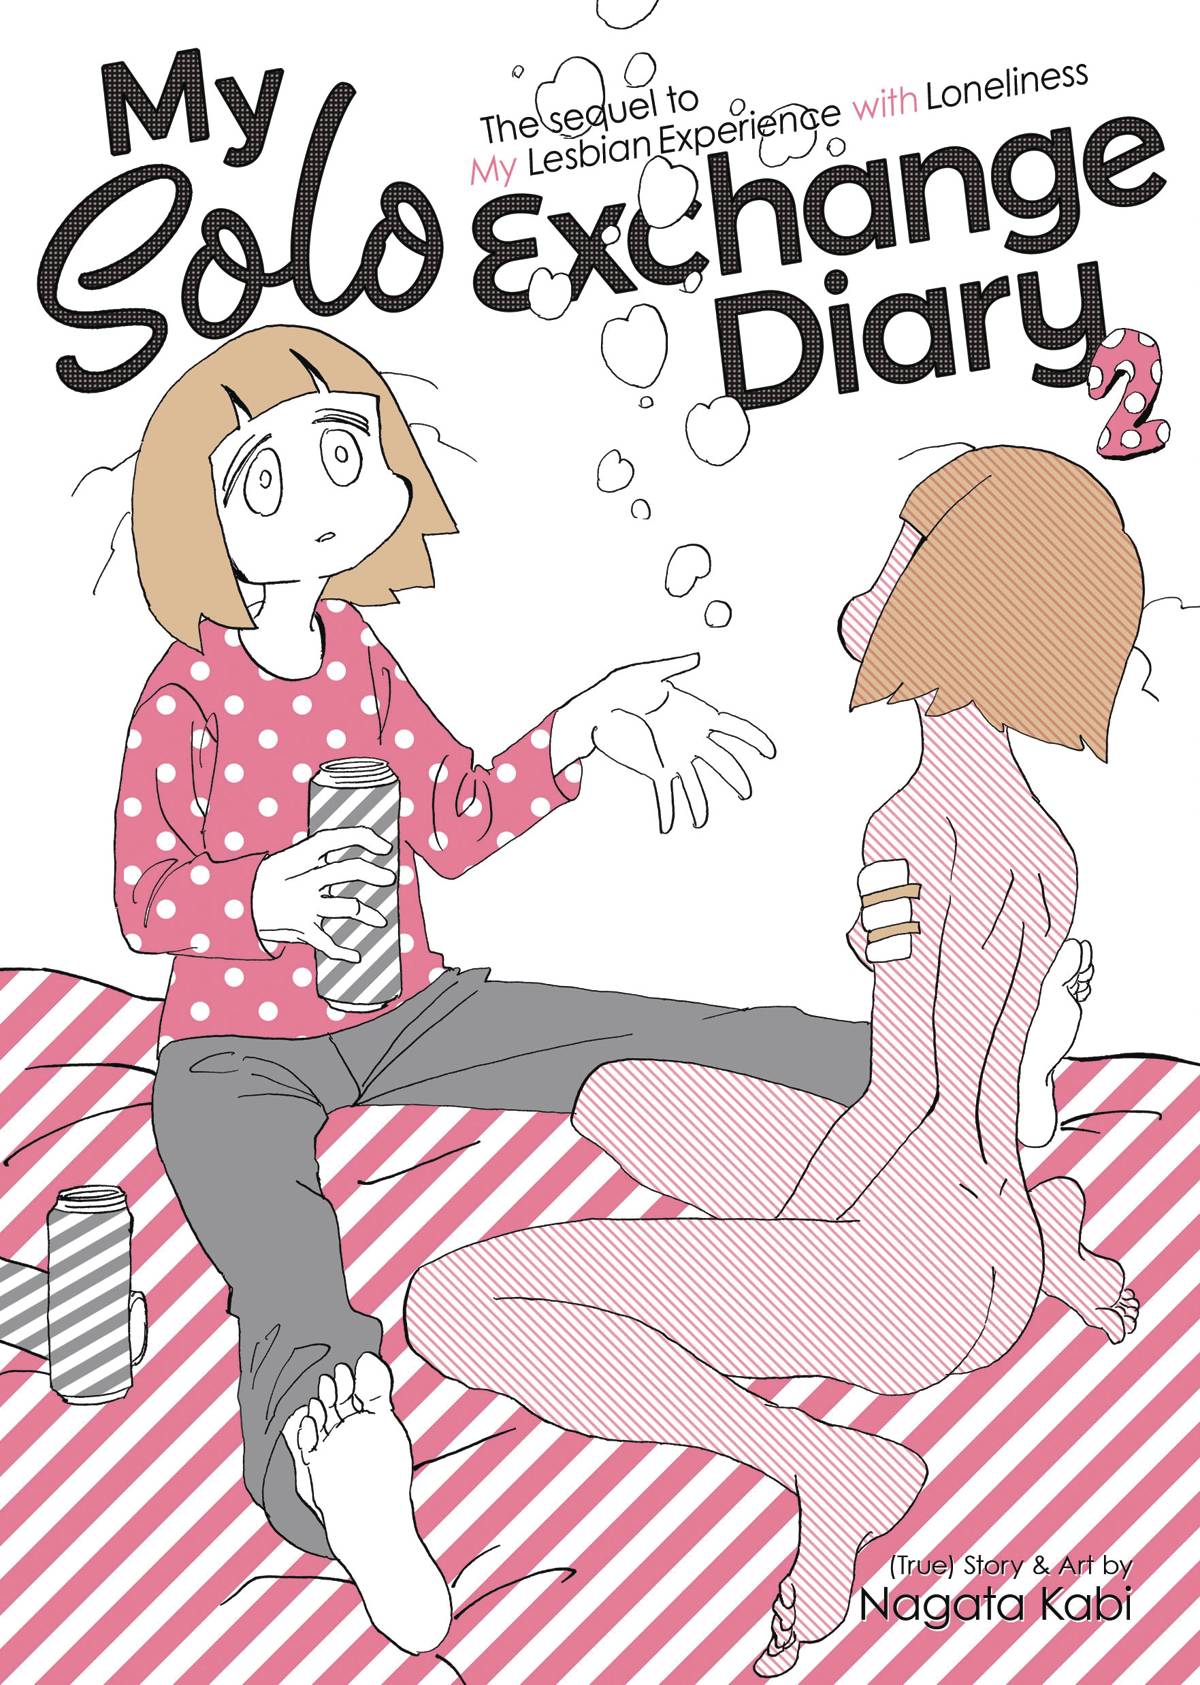 My Solo Exchange Diary Manga Volume 2 (Mature)